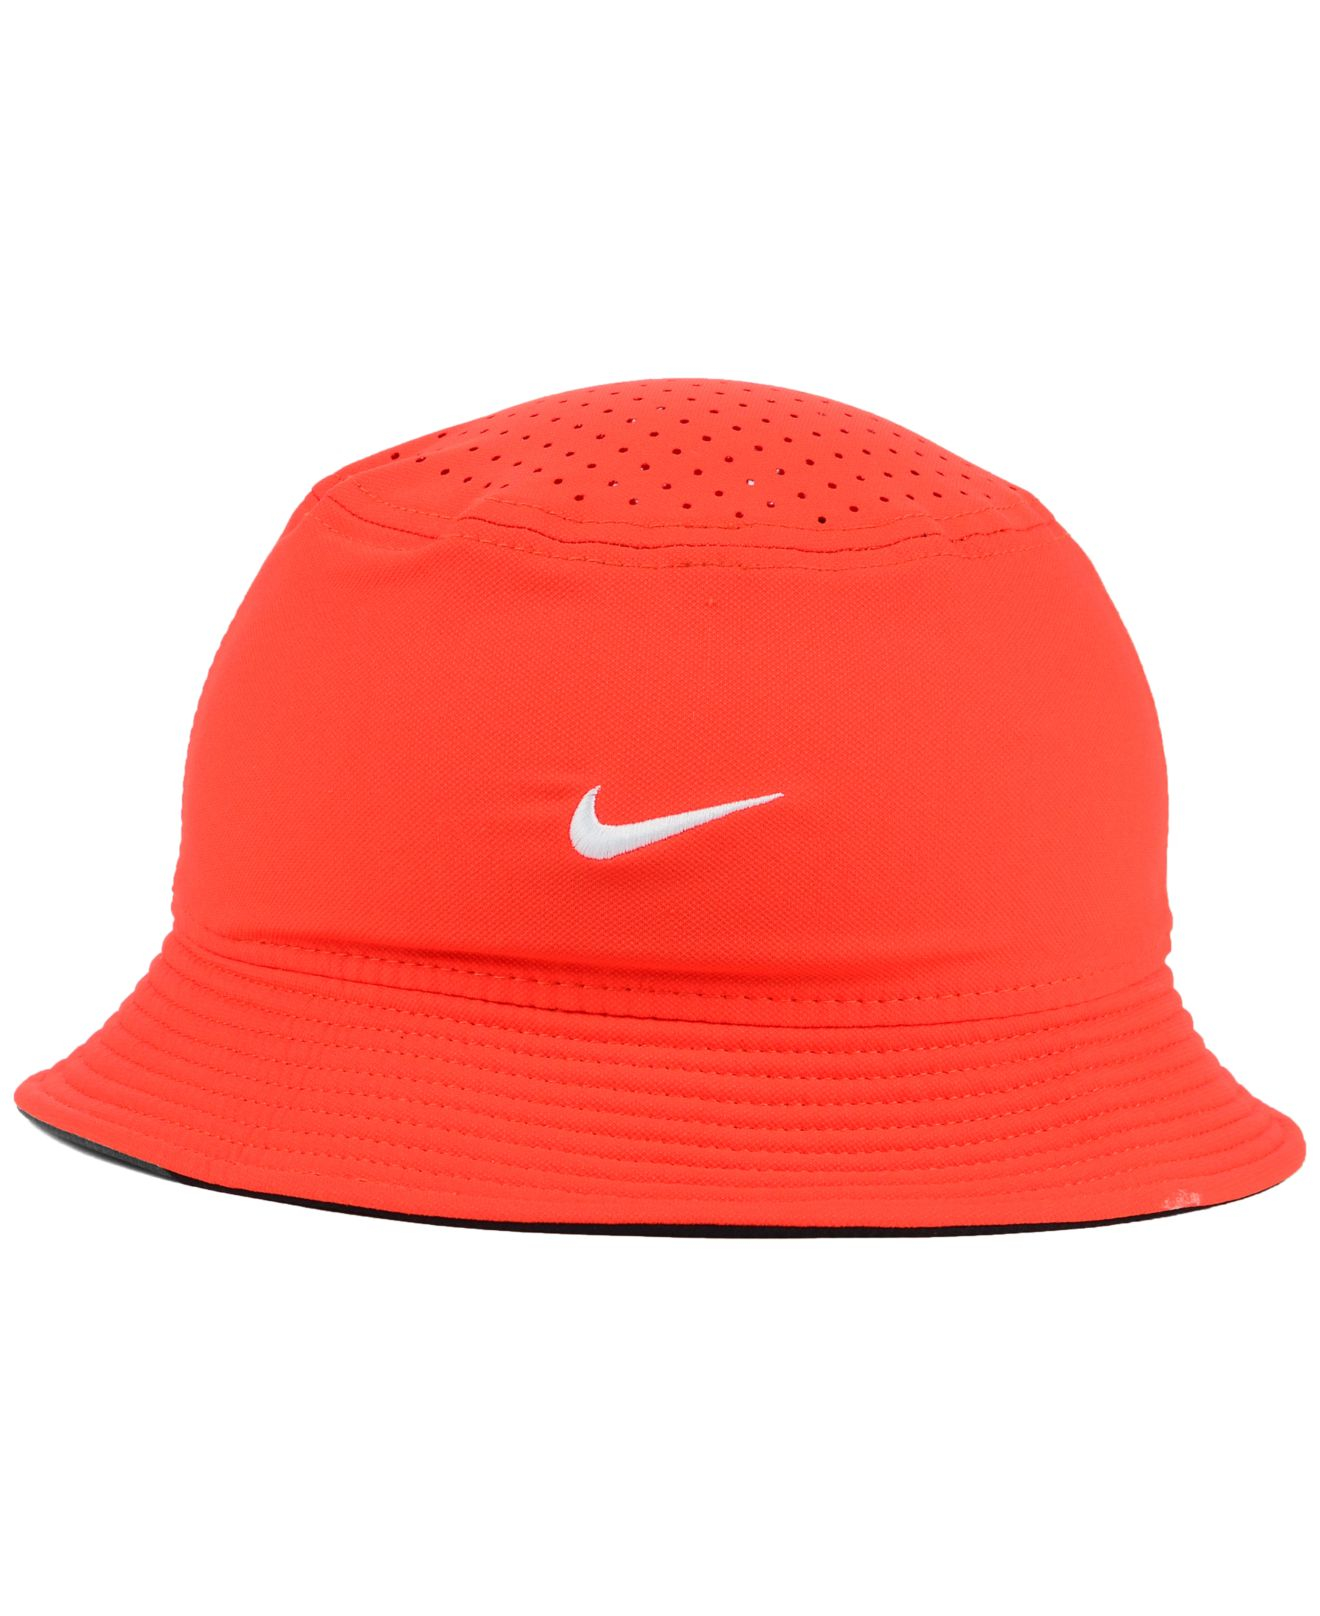 nike orange bucket hat